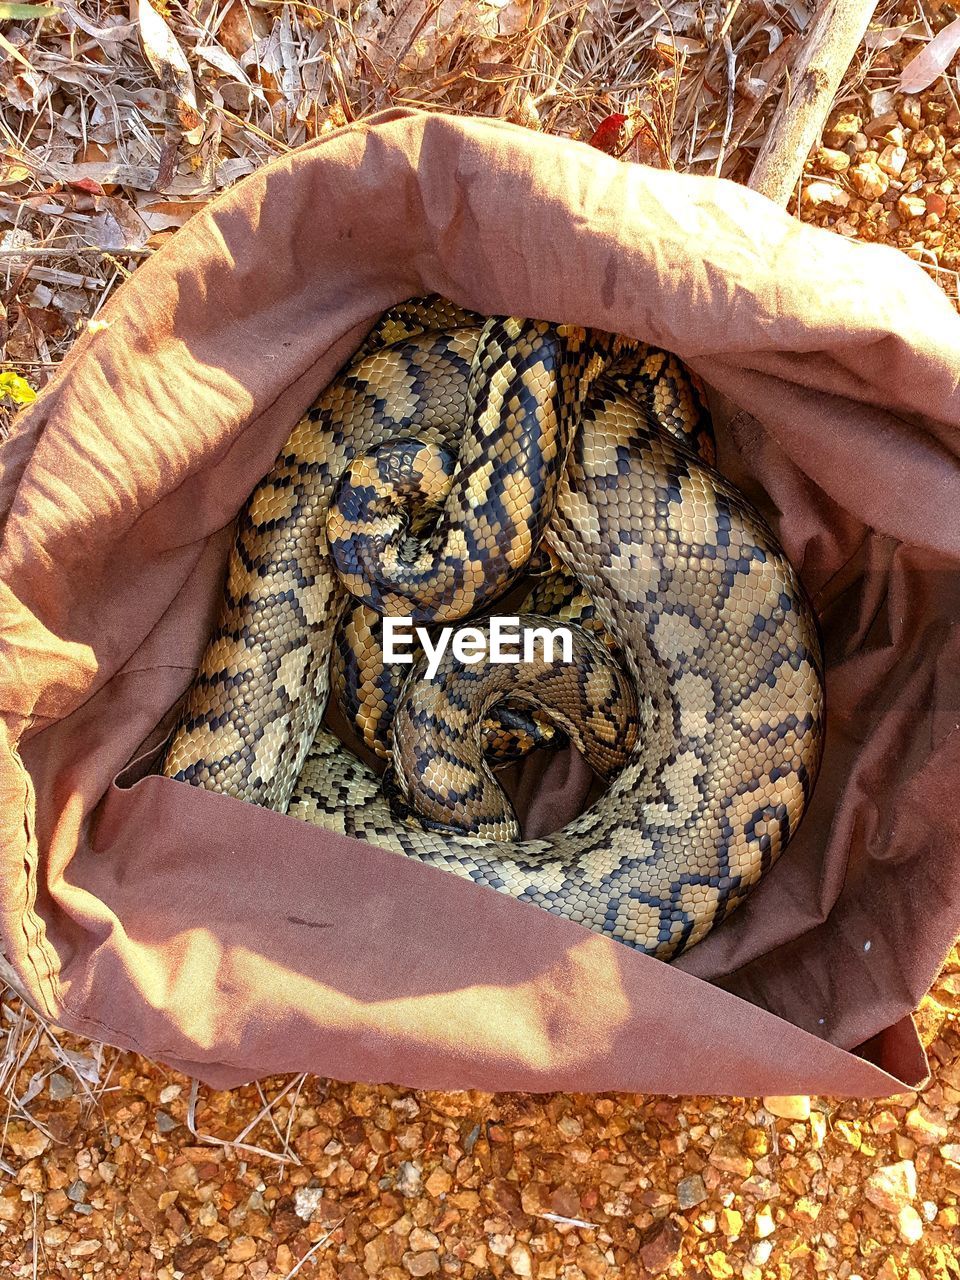 Carpet python rescued 